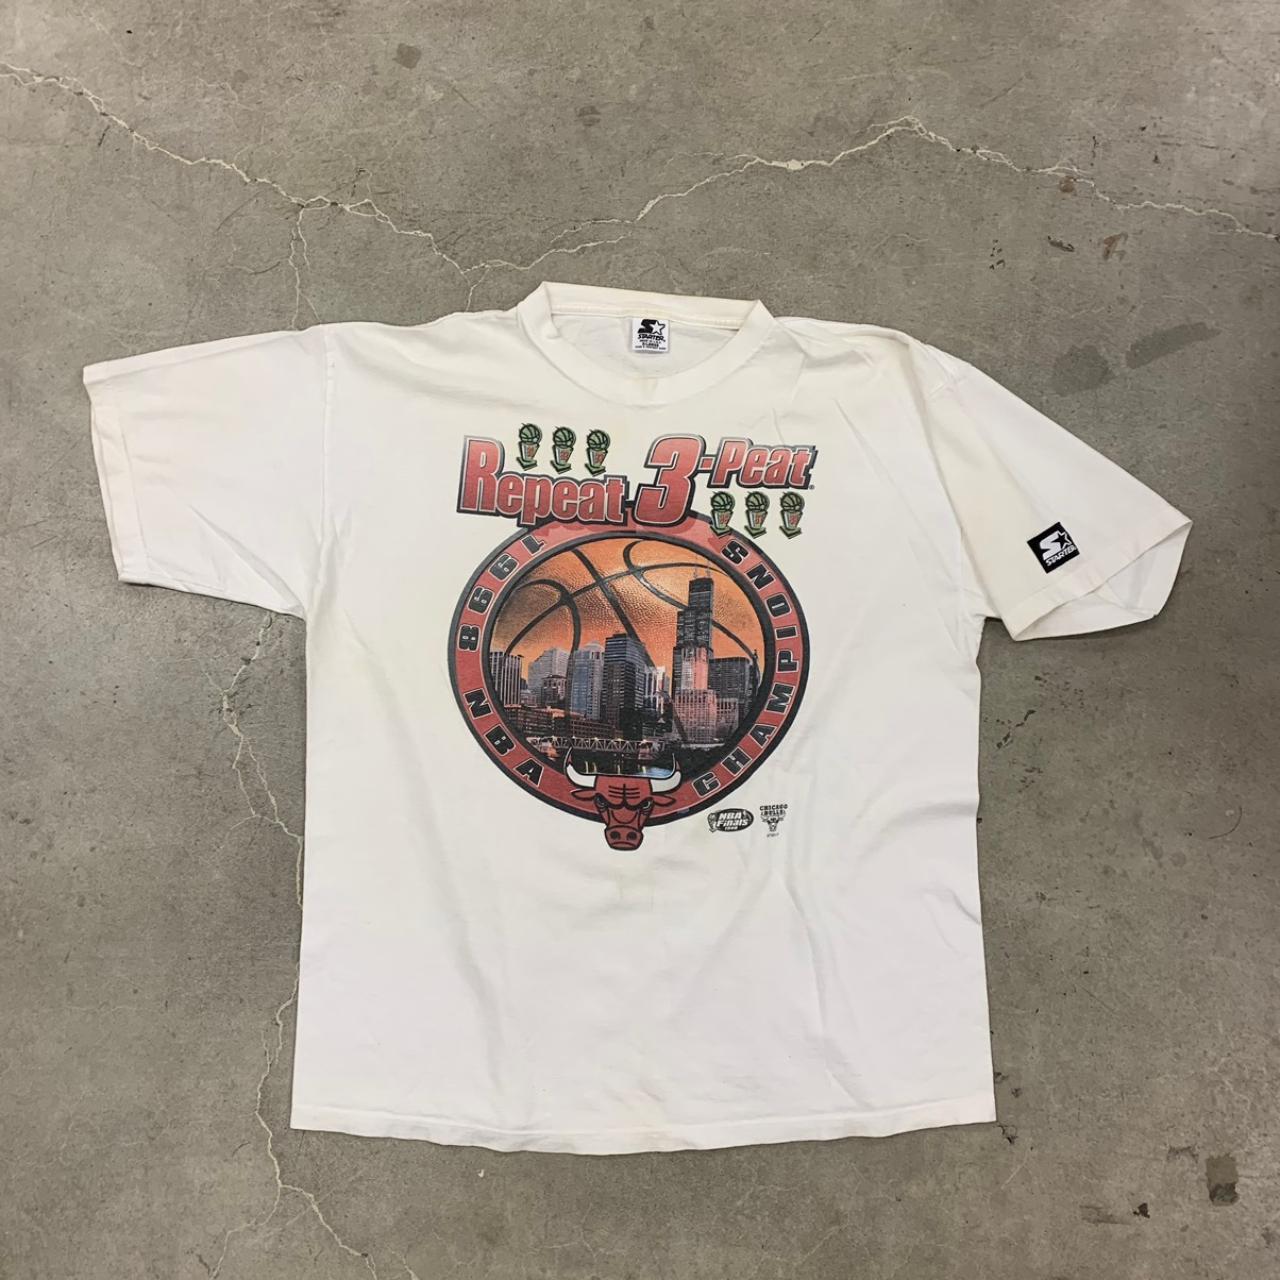 Vintage Vintage Chicago Bulls Repeat 3-Peat championship T-shirt